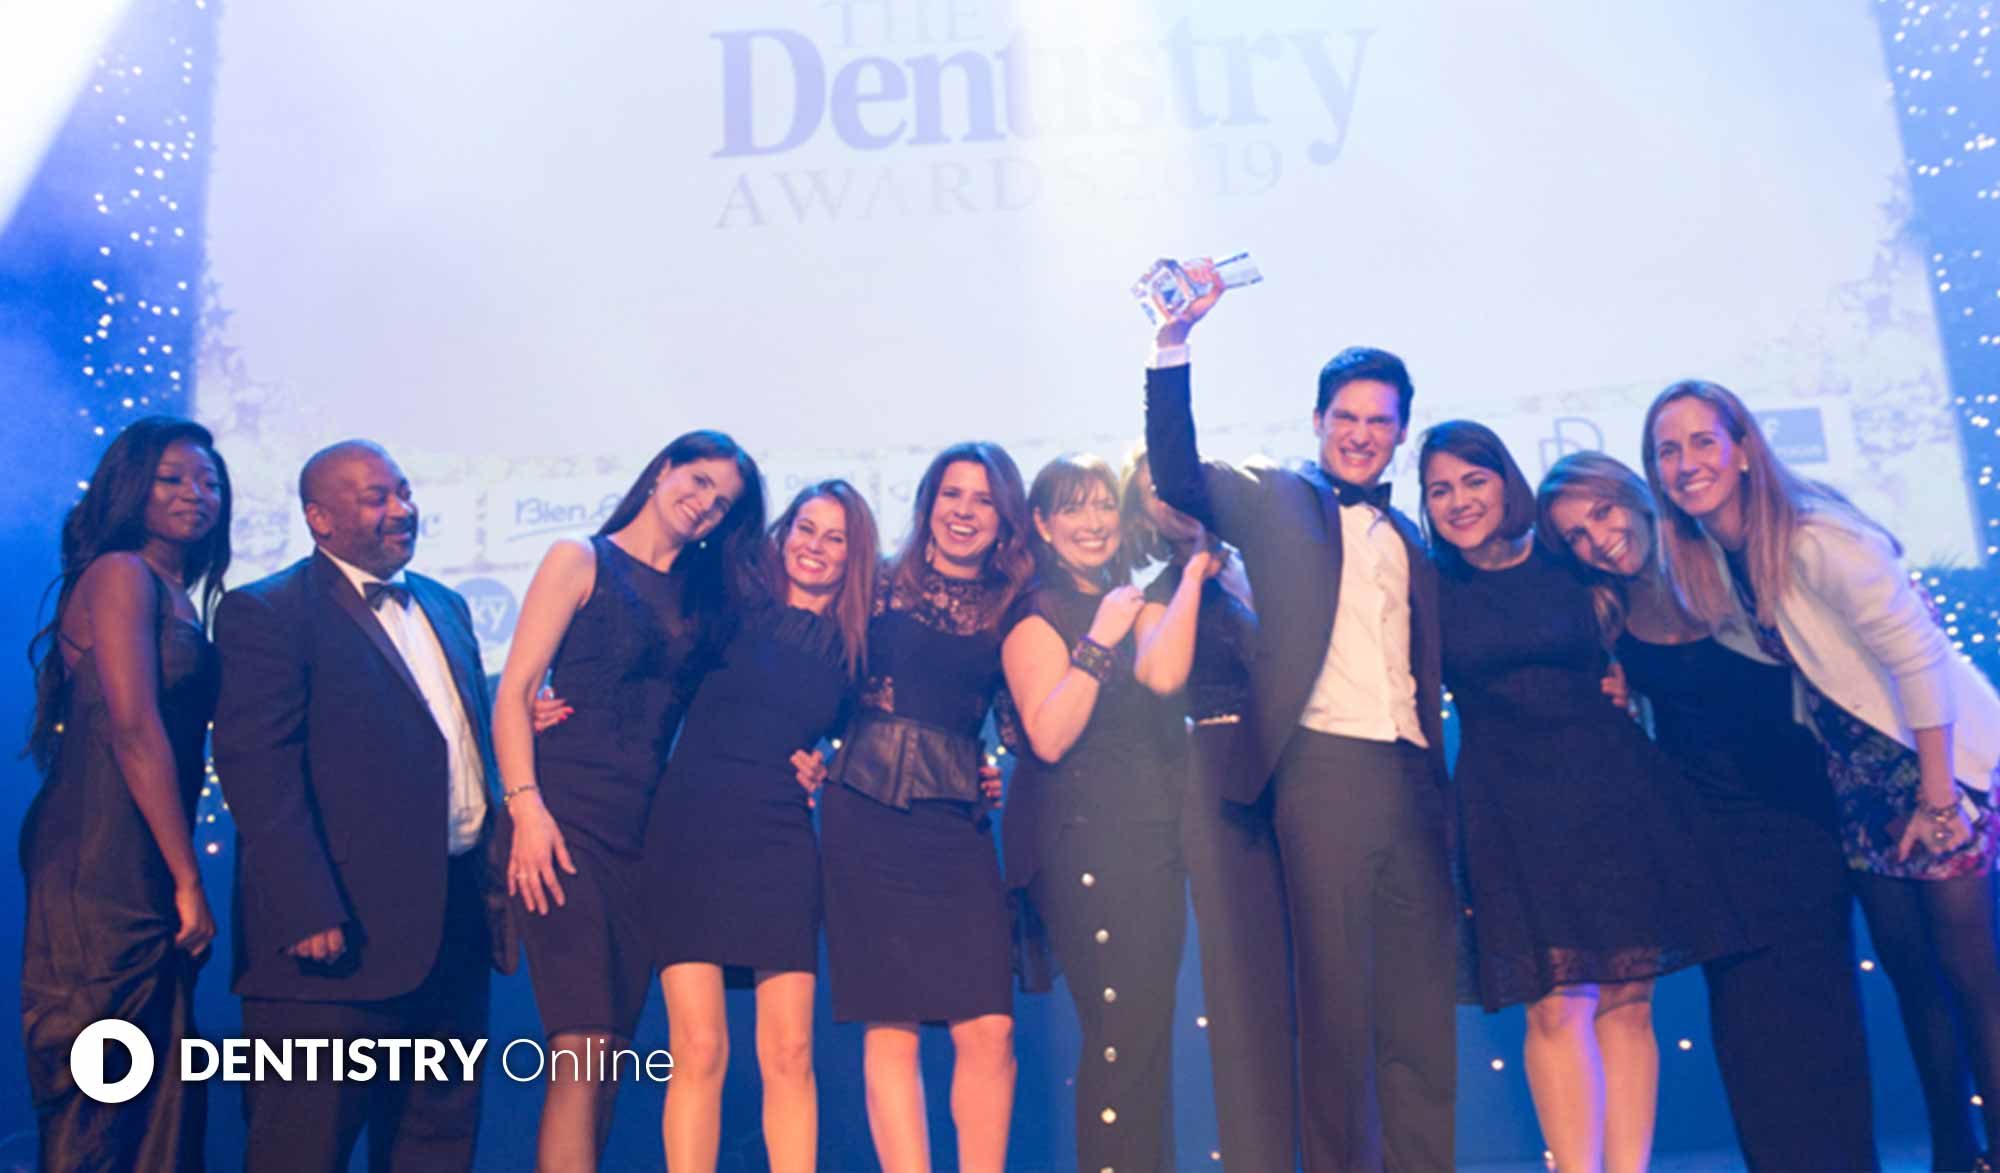 Dentistry Awards winners